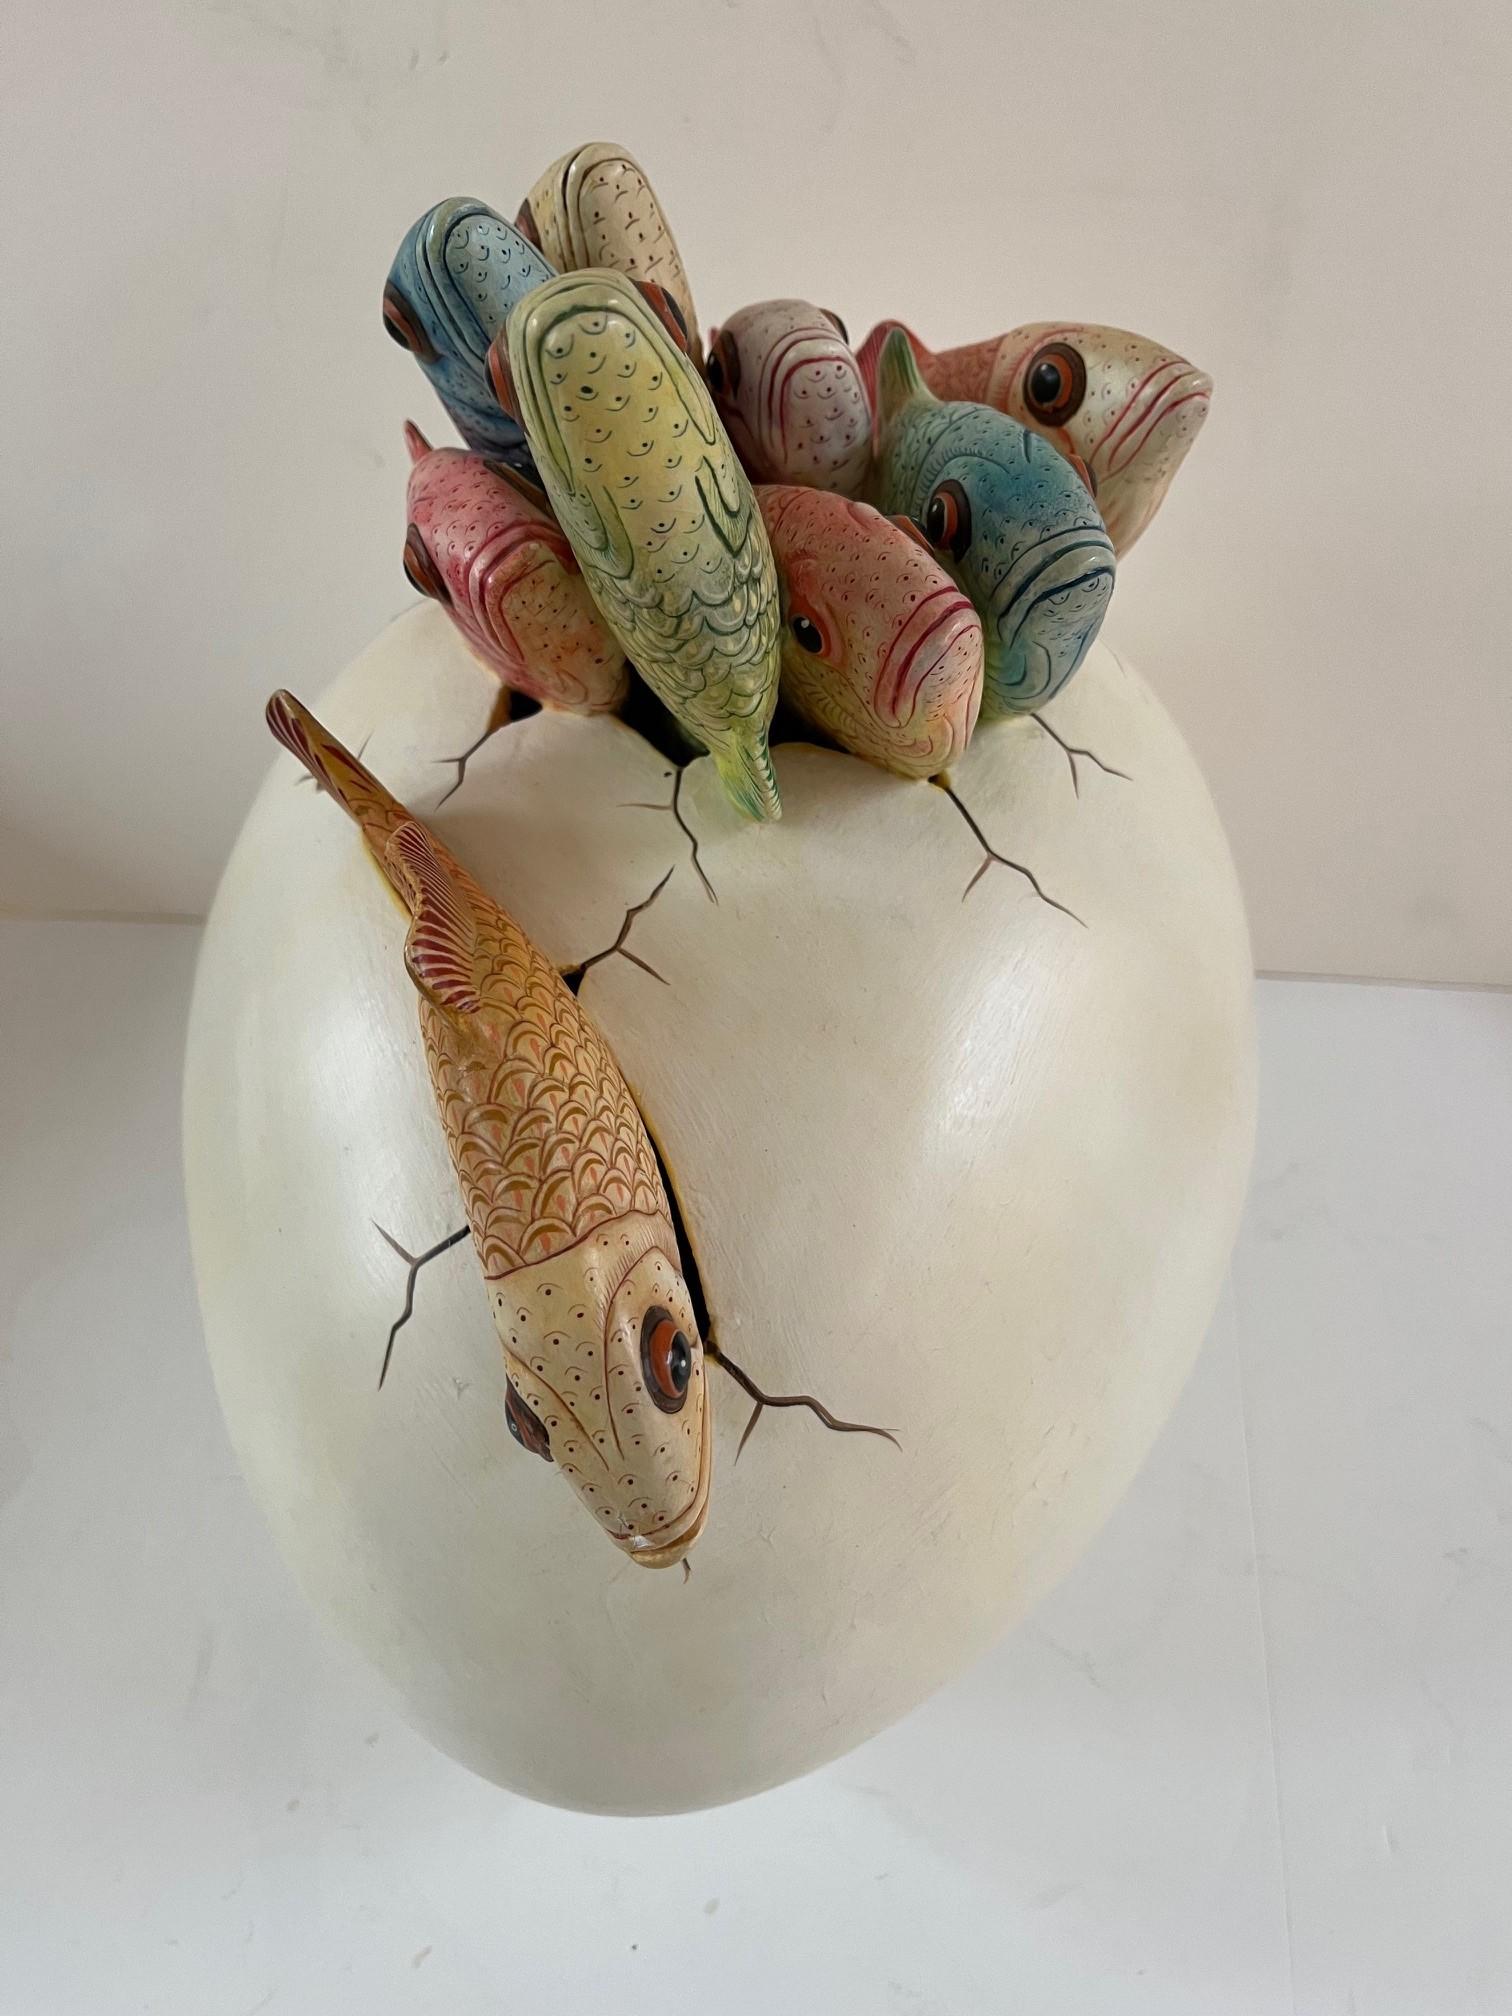 Grande sculpture en céramique représentant un œuf de poisson attachant, de Sergio Bustamente. en vente 1